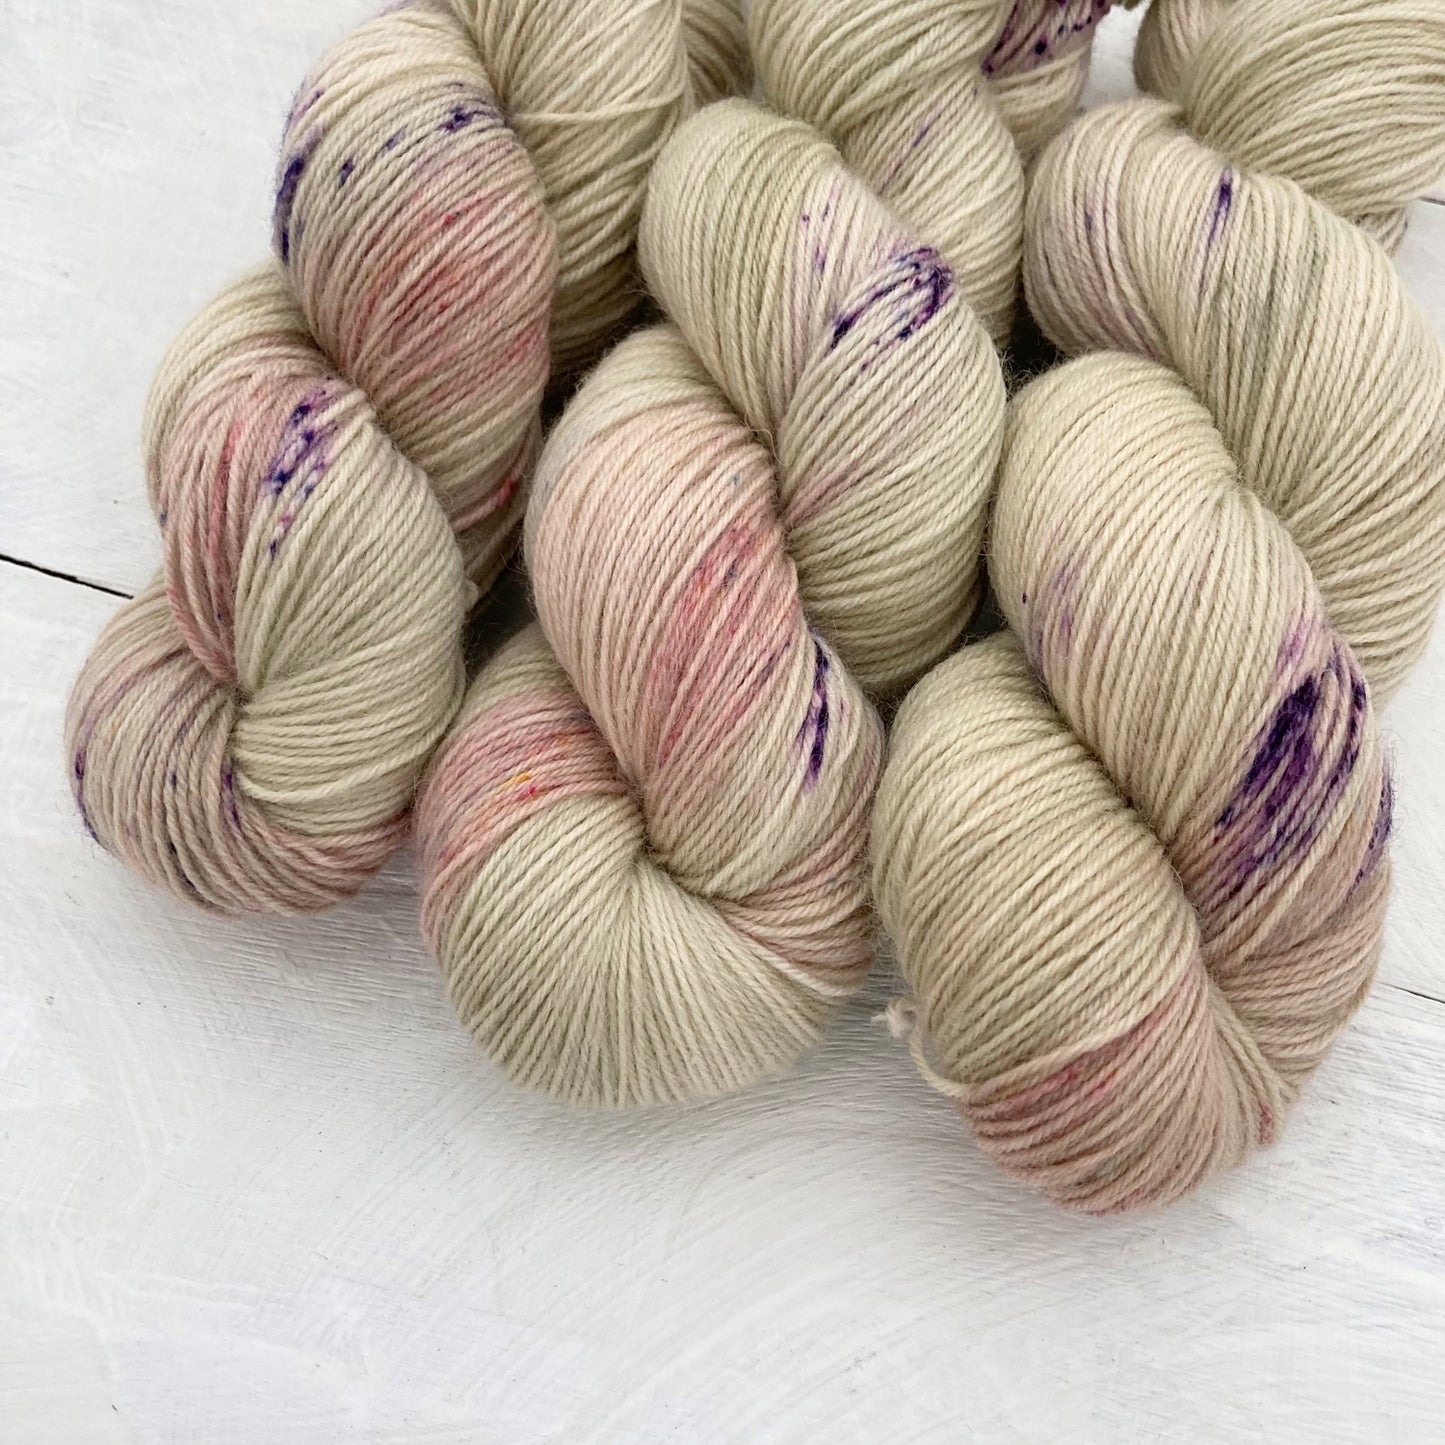 Hand-dyed yarn No.218 sock yarn "Pour un tombeau sans nom"